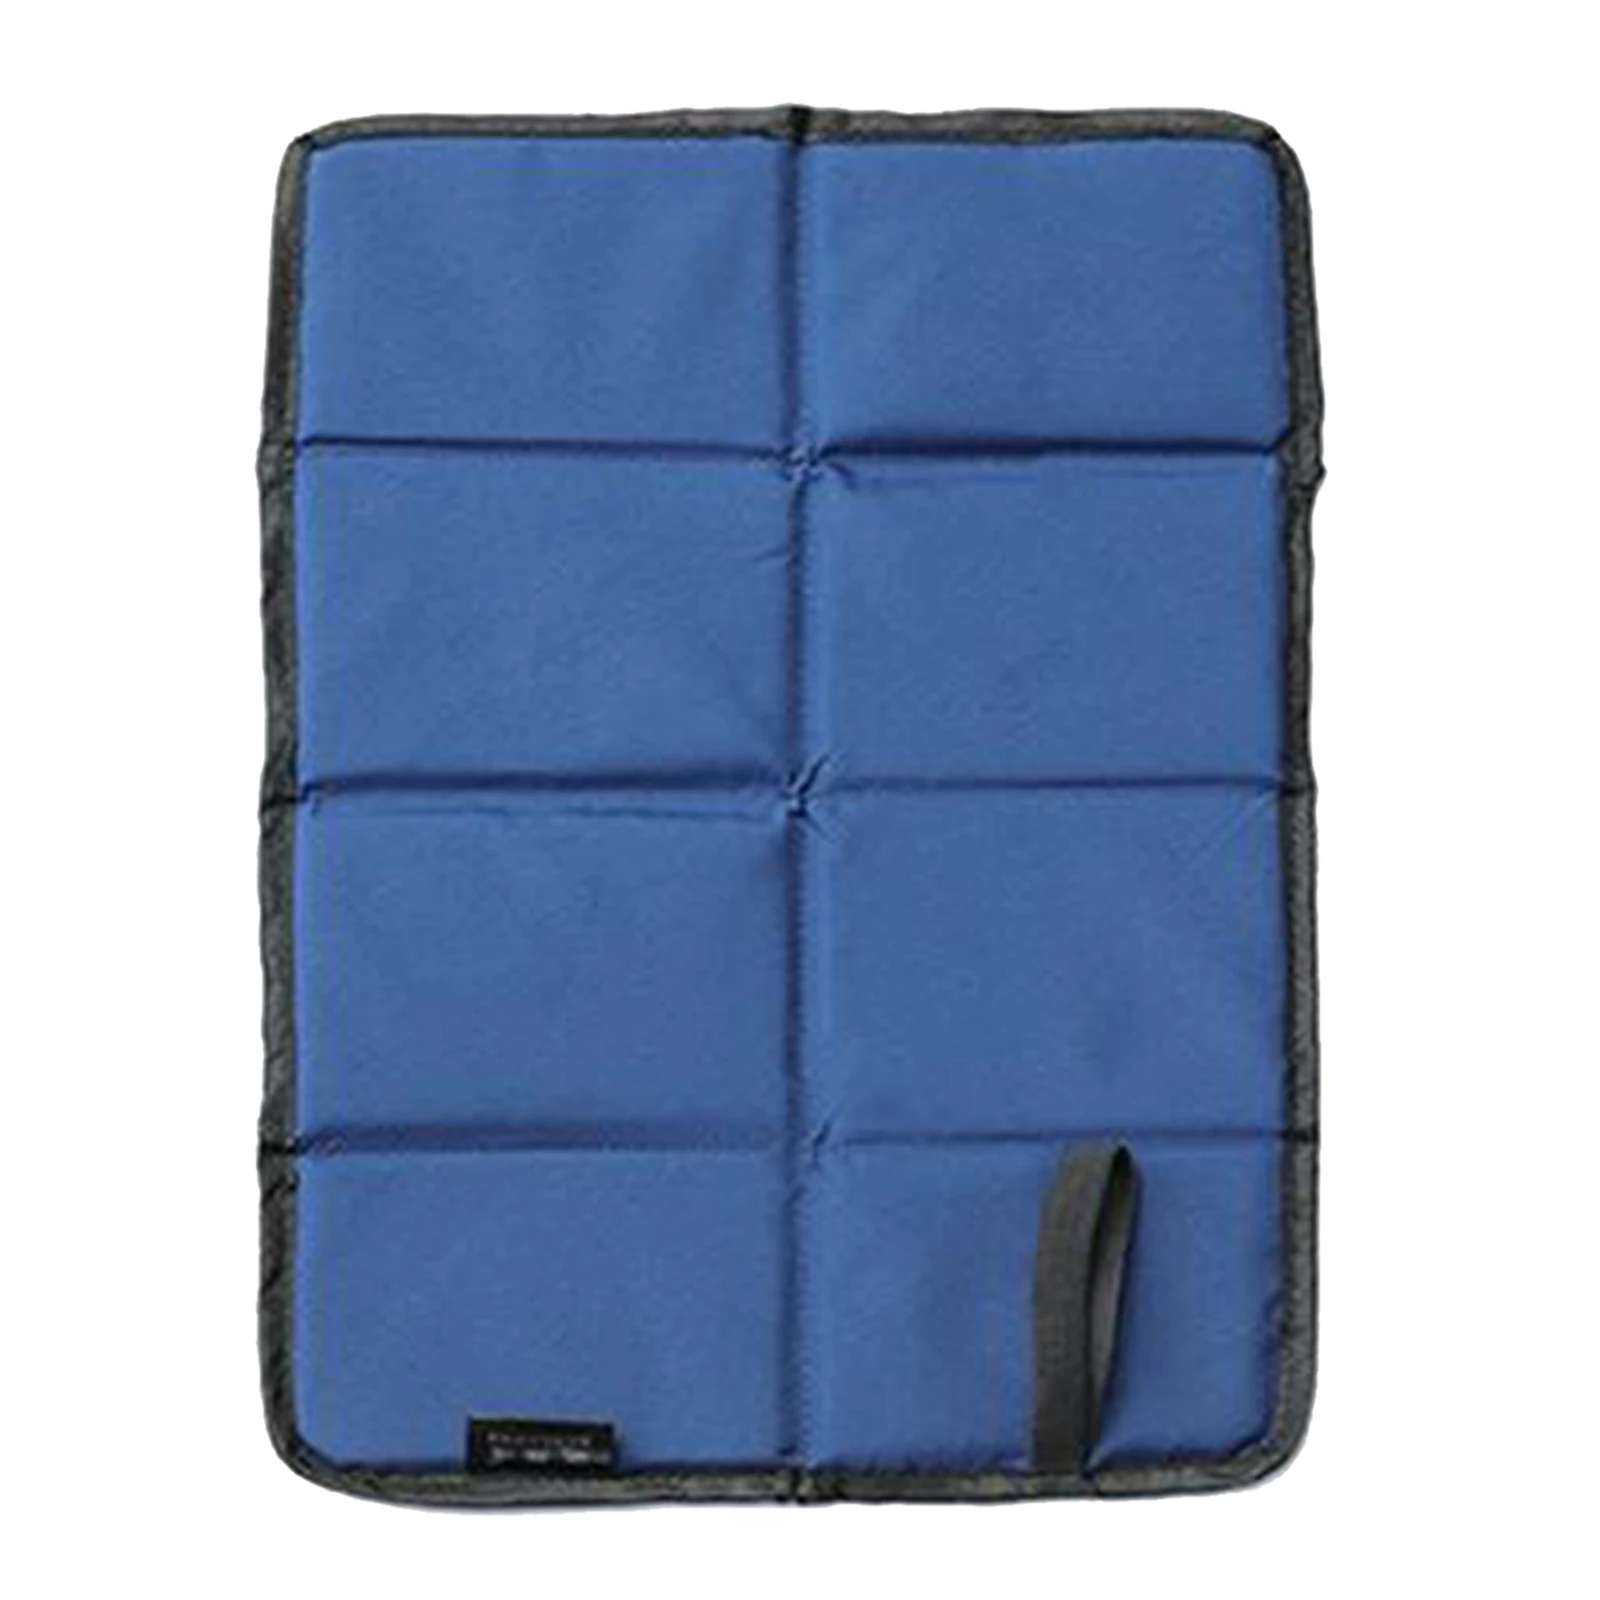 Foldable Outdoor Camping Mat Seat Moisture Proof Cushion Portable Waterproof Foam Pads Yoga Chair Picnic Beach Pad